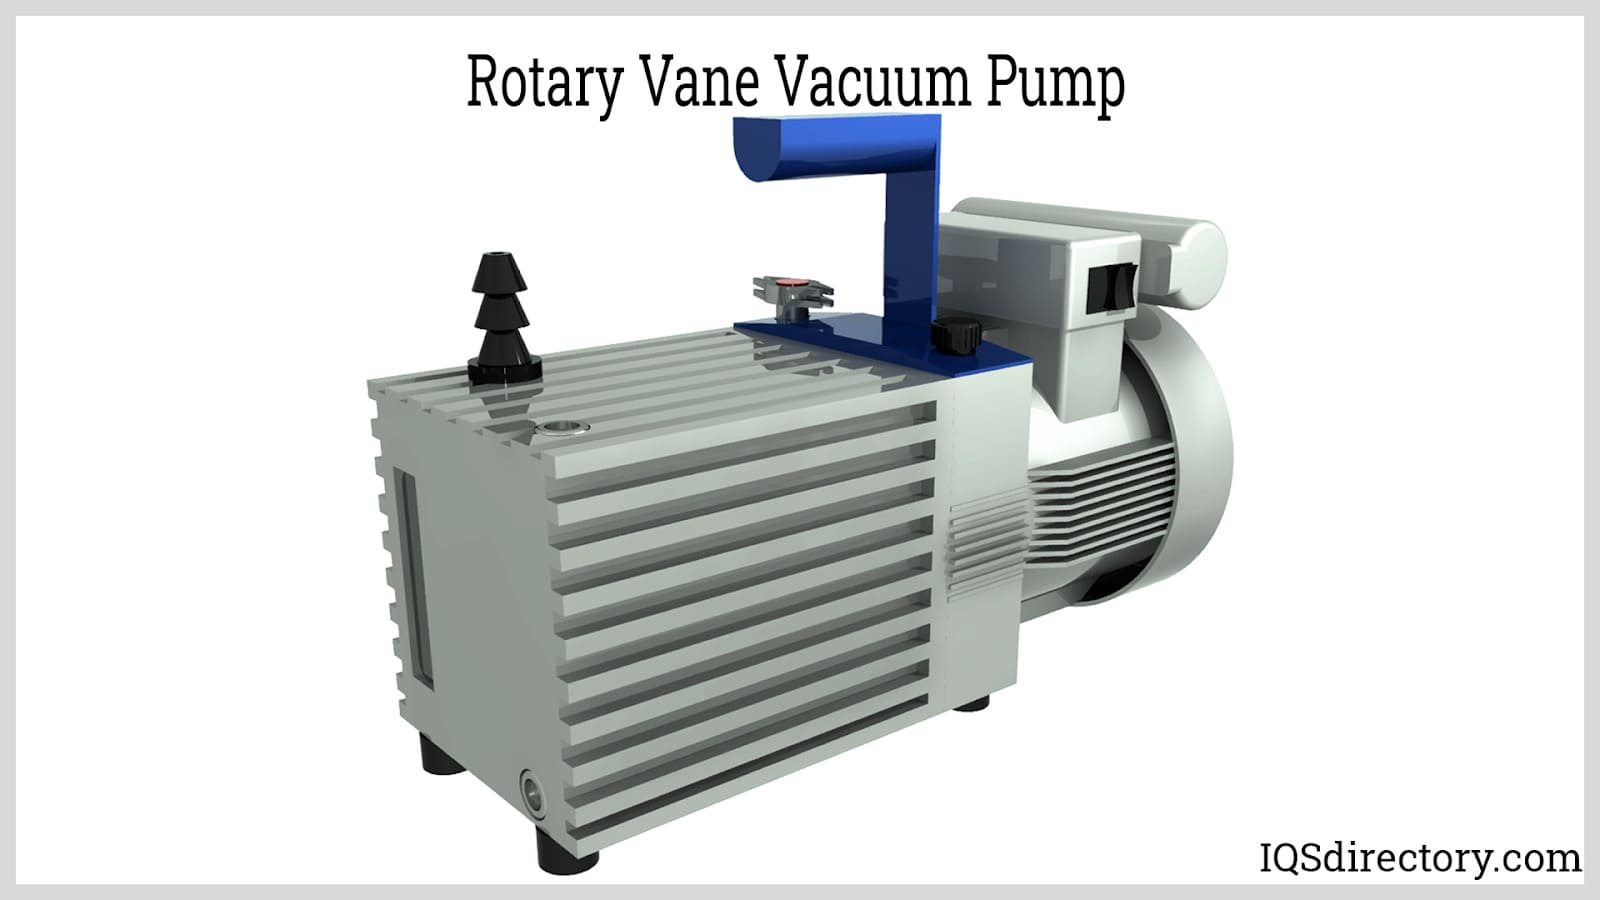 https://www.iqsdirectory.com/articles/vacuum-pump/rotary-vane-vacuum-pumps/rotary-vane-vacuum-pump.jpg